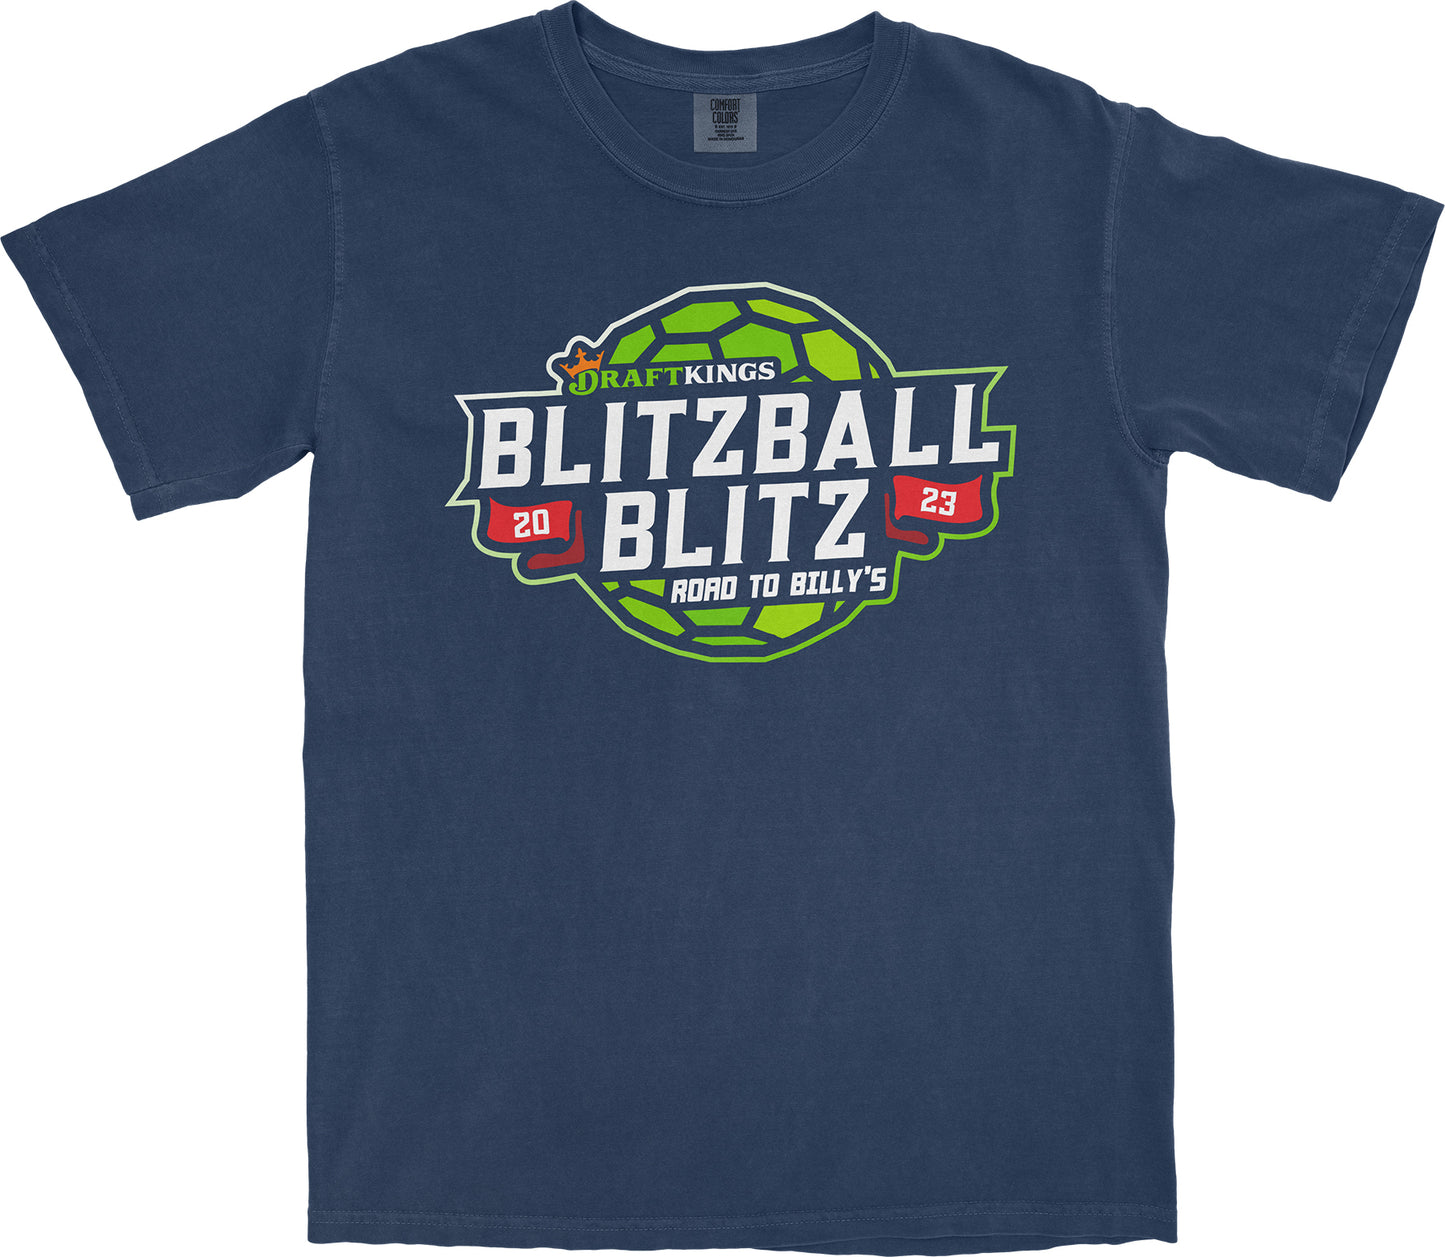 Blitzball Blitz Road To Billy's